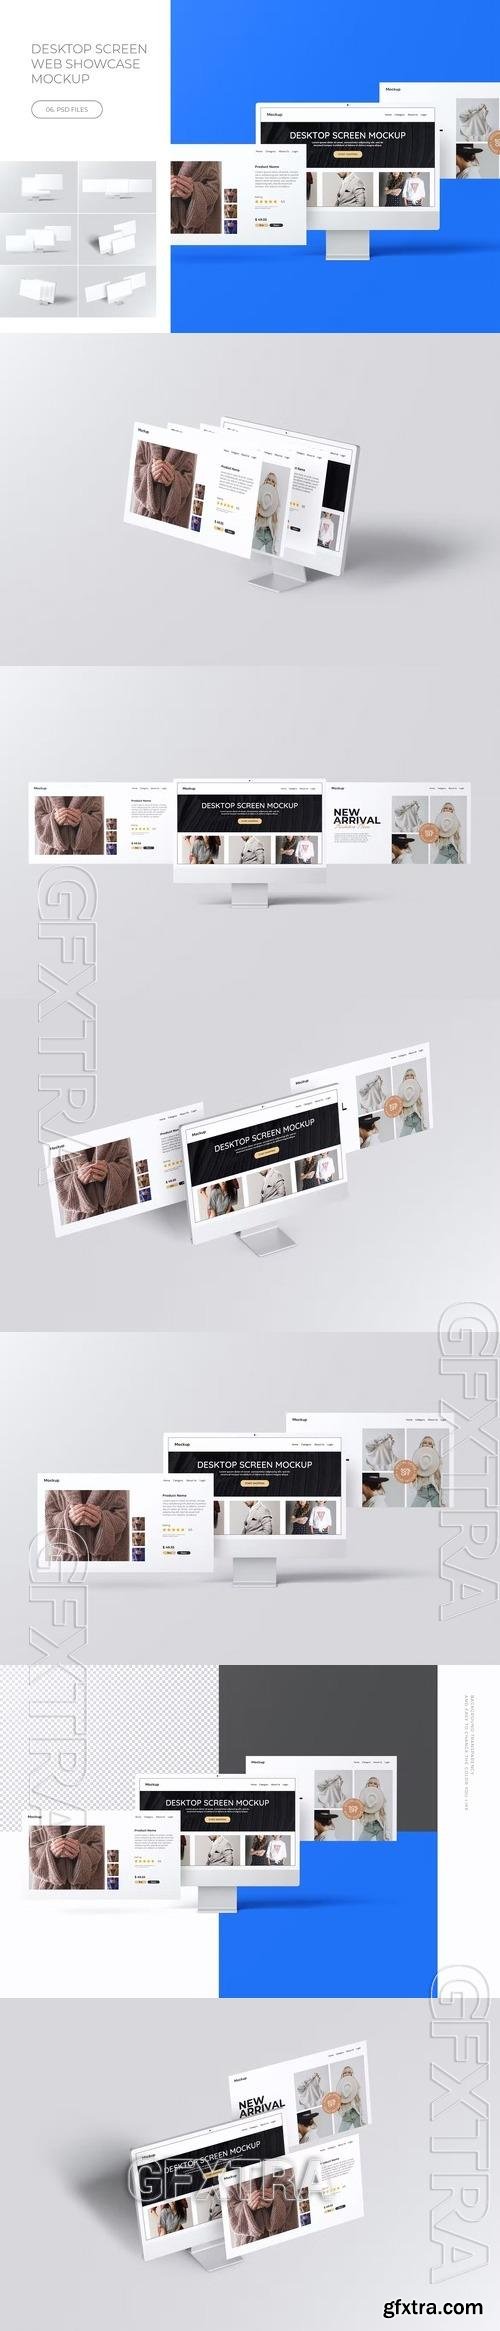 Desktop Screen & Web Showcase Mockup QFF35RP